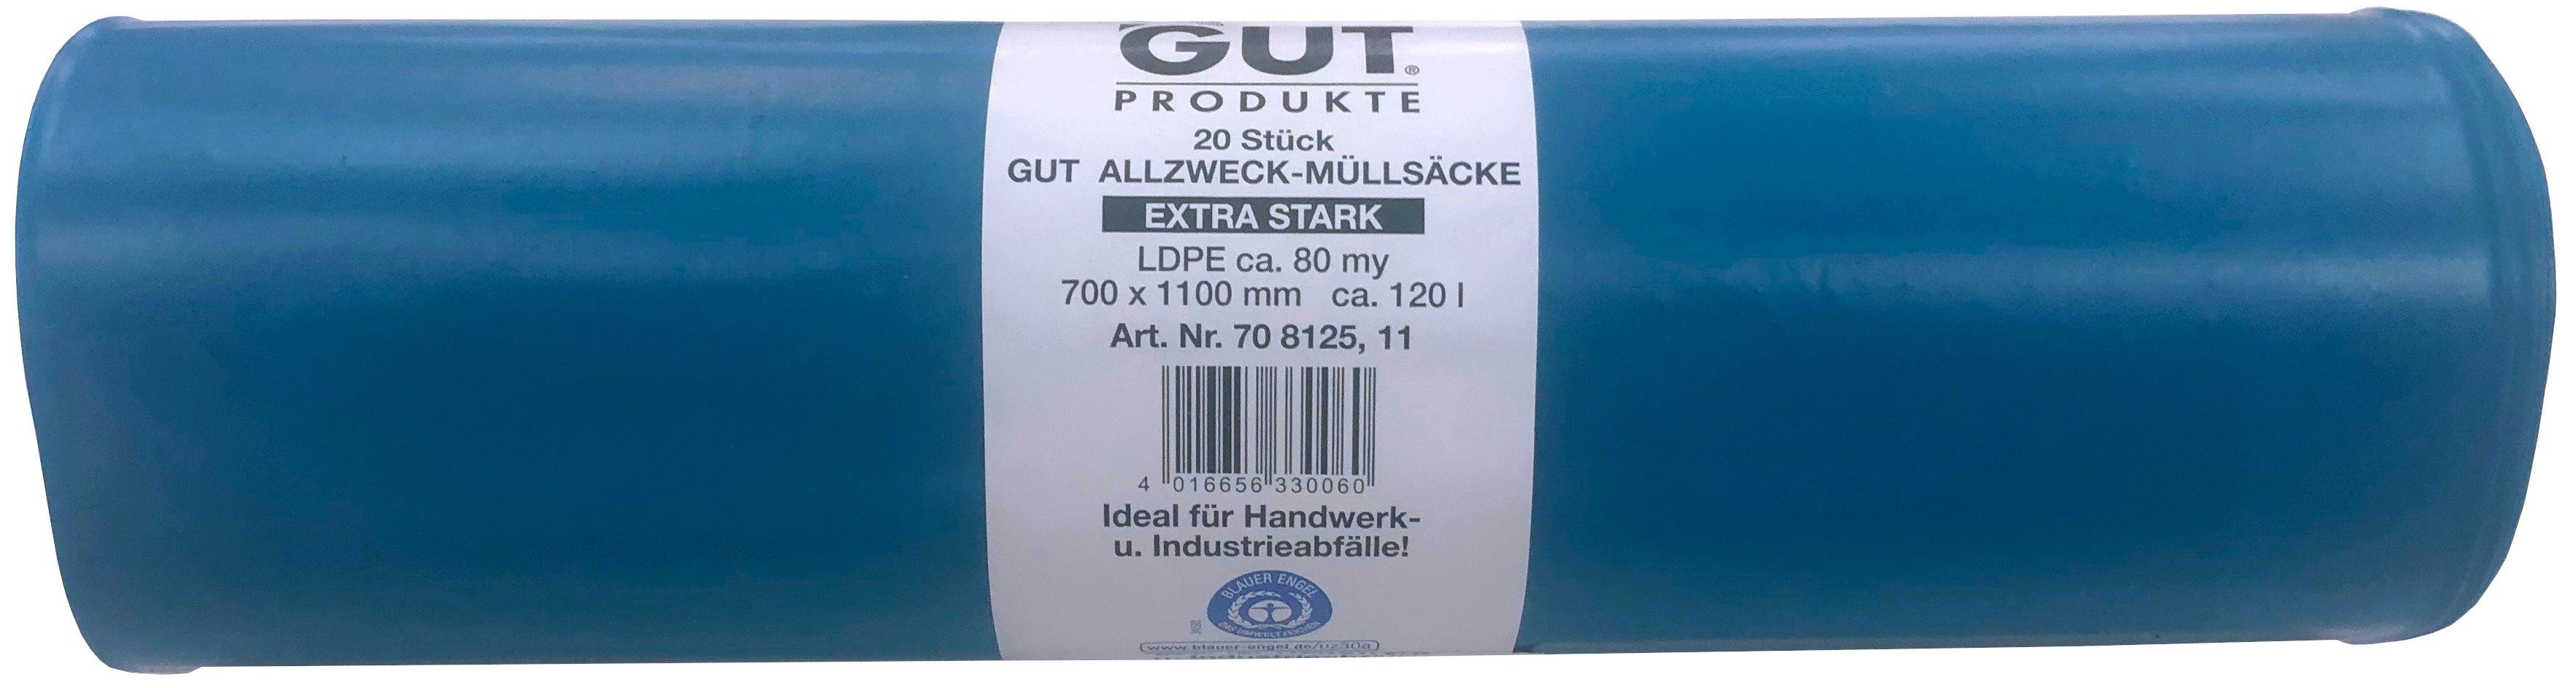 GUT-Produkte Müllbeutel Abfallsäcke Recycling-LDPE 120L 80µ Extra Stark, Extra Stark